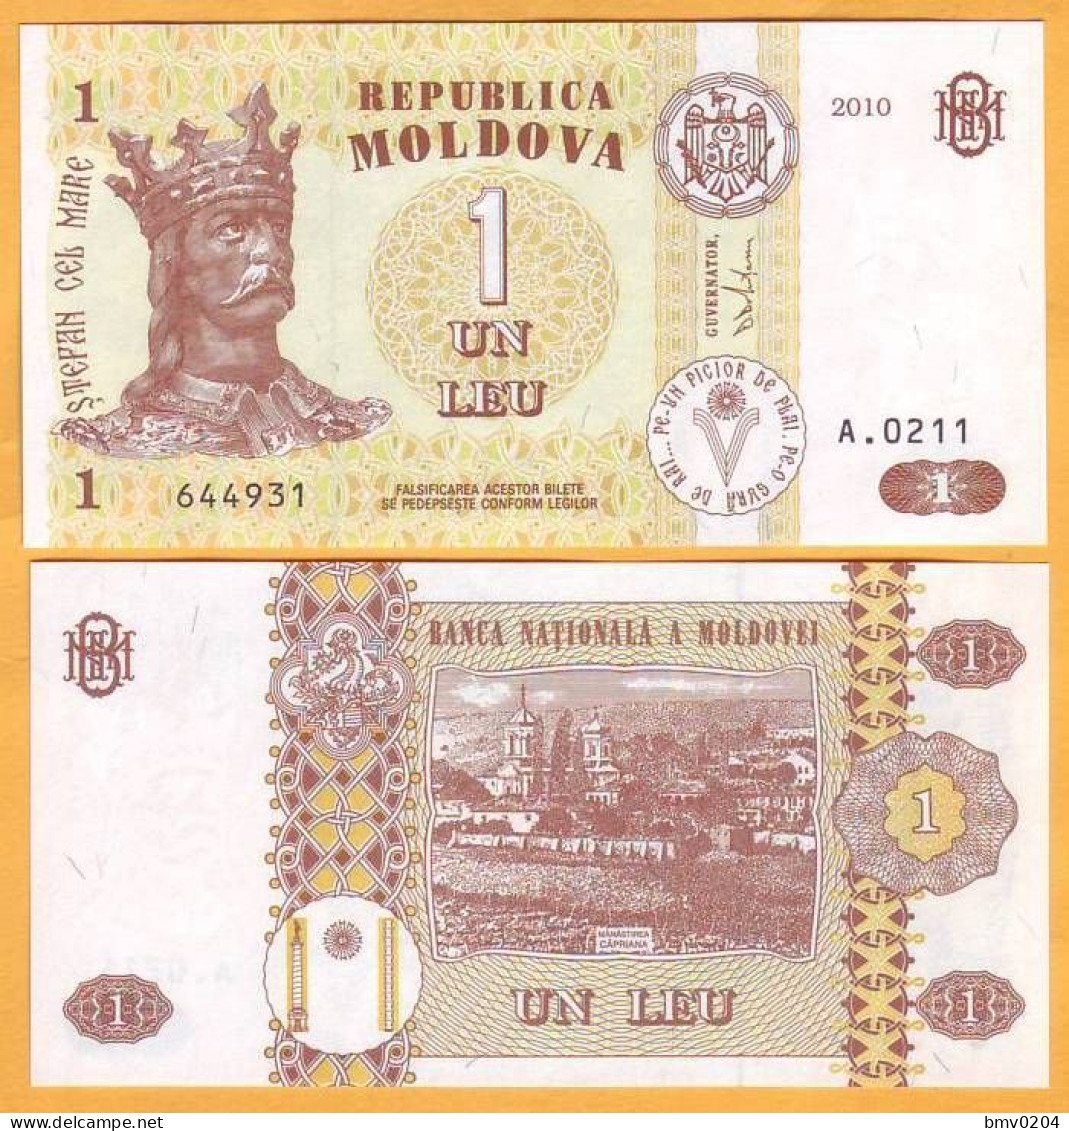 Moldova Moldavie  5 Banknotes  "1 LEI  2010", UNC  One Set Of 5 1 Leu Banknotes. - Moldavië